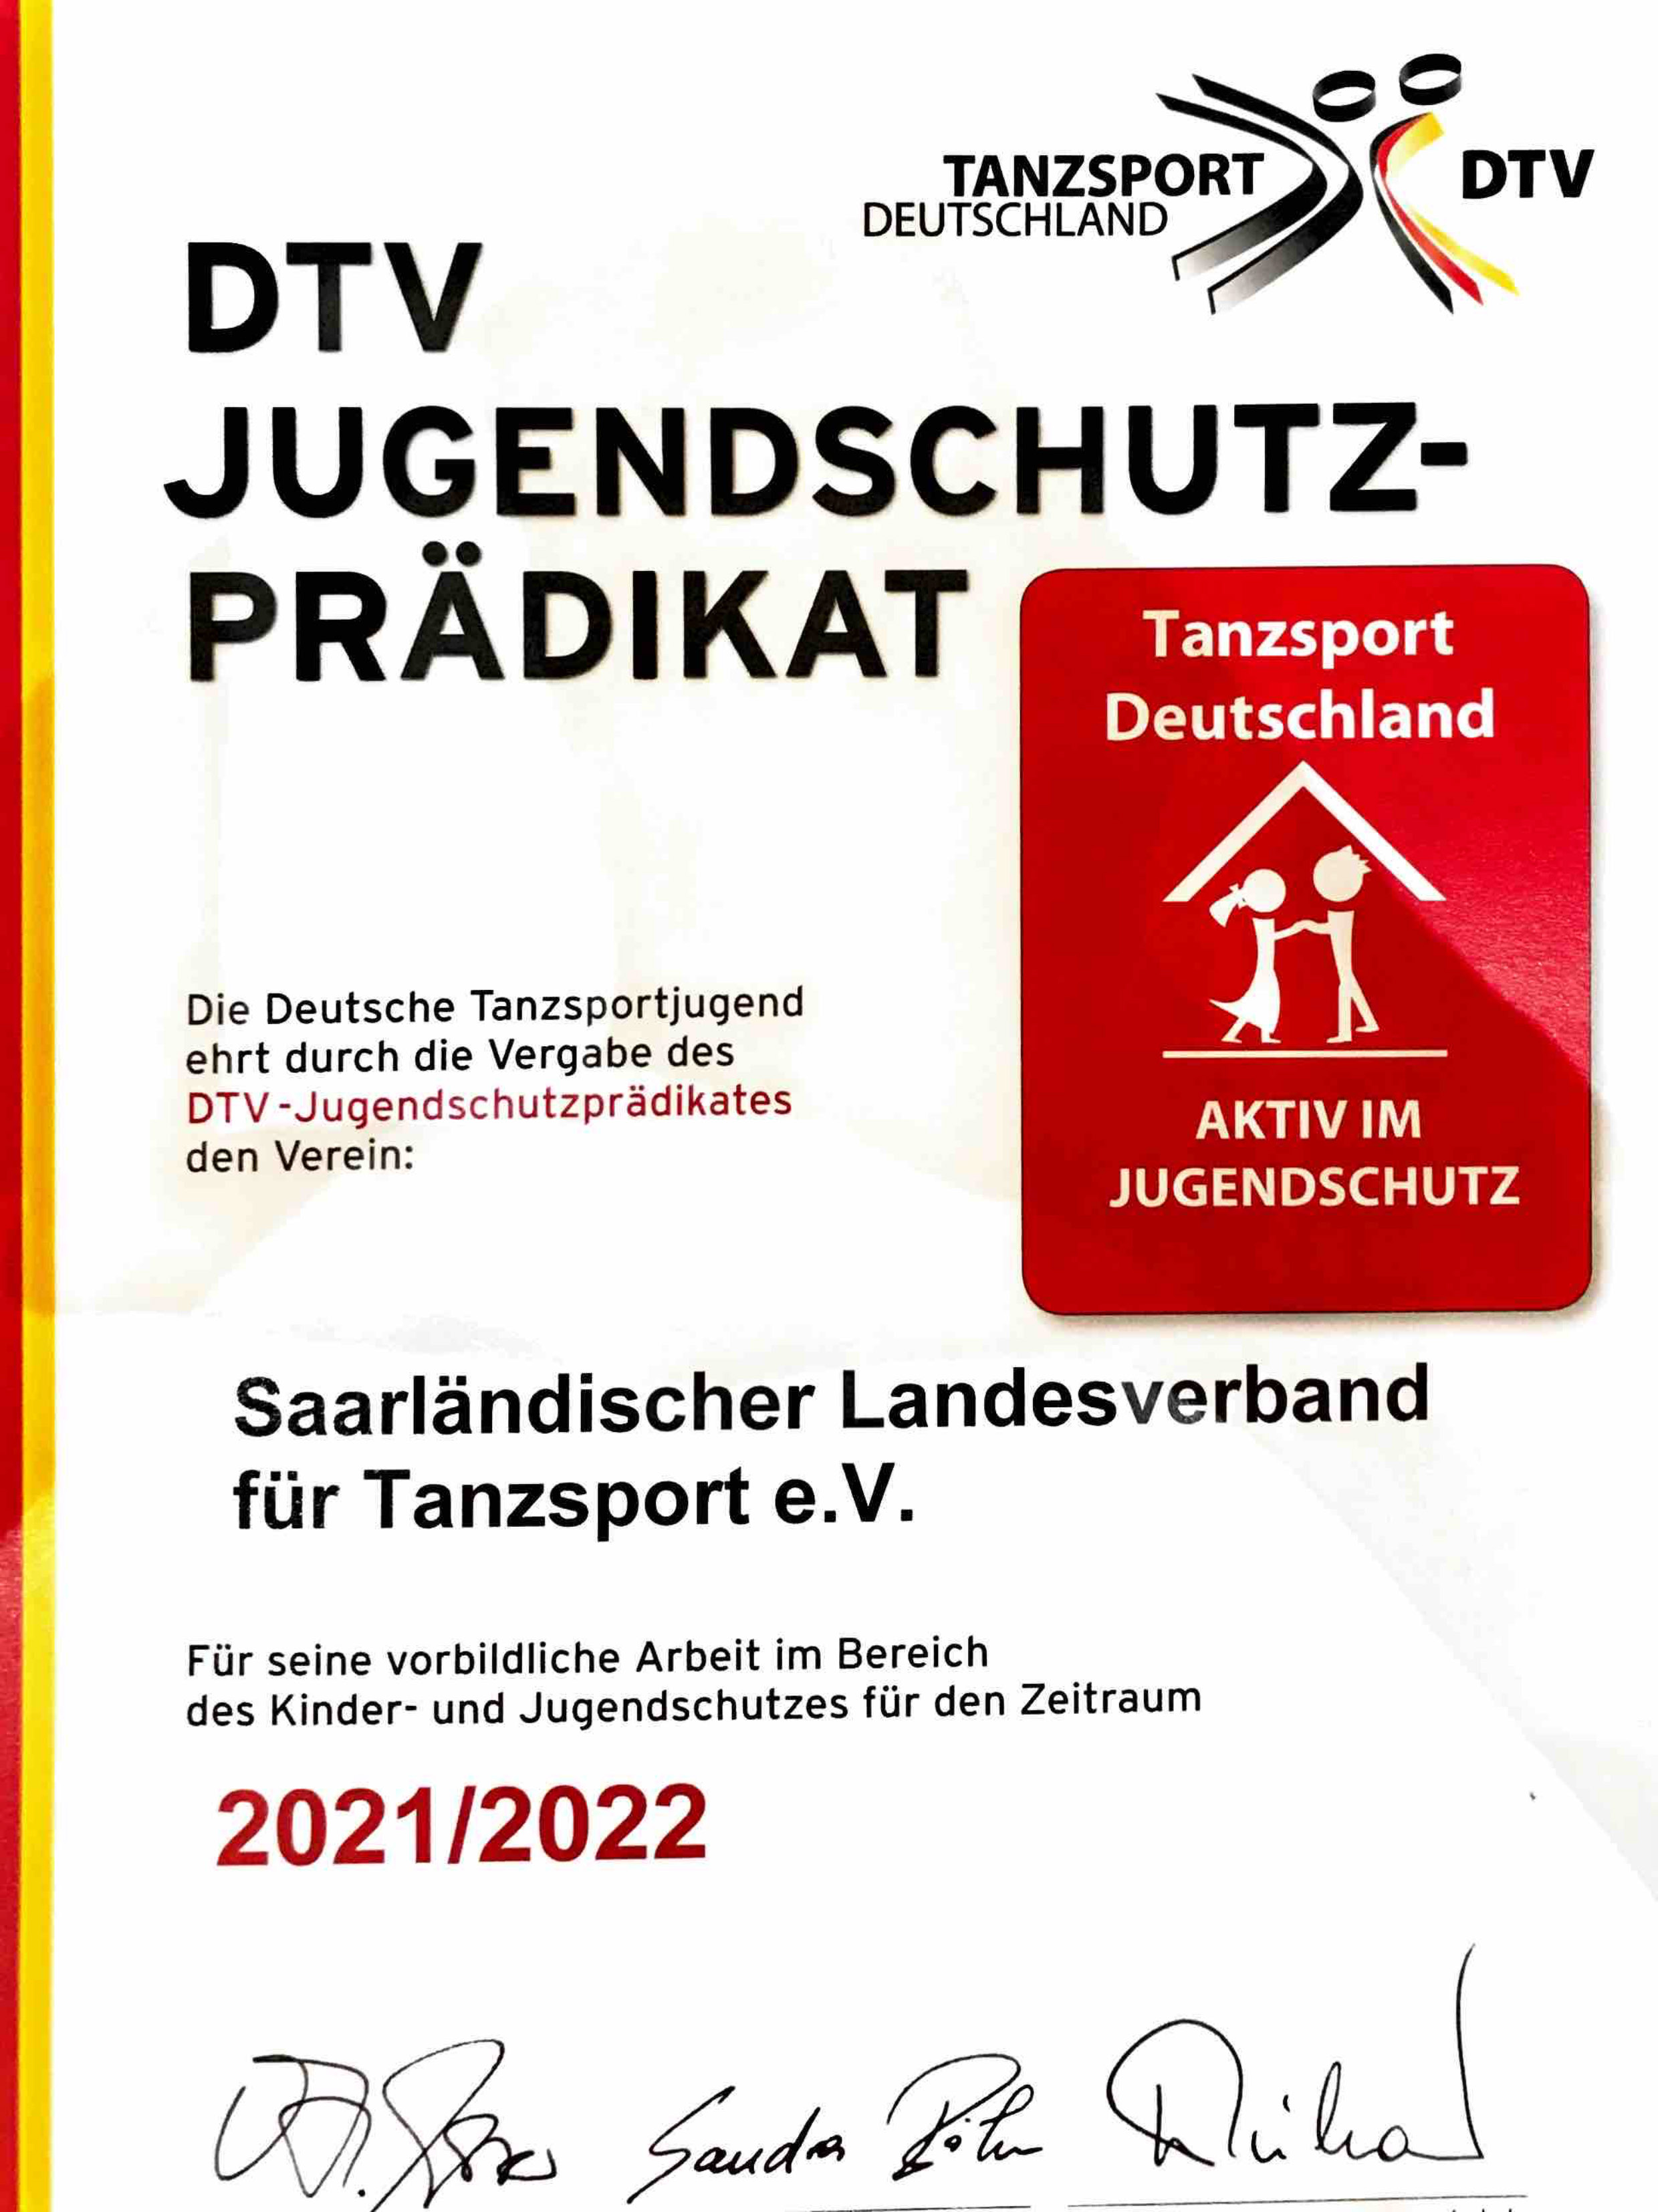 DTV Jugendschutzpradikat Scan 25. Juni 2022